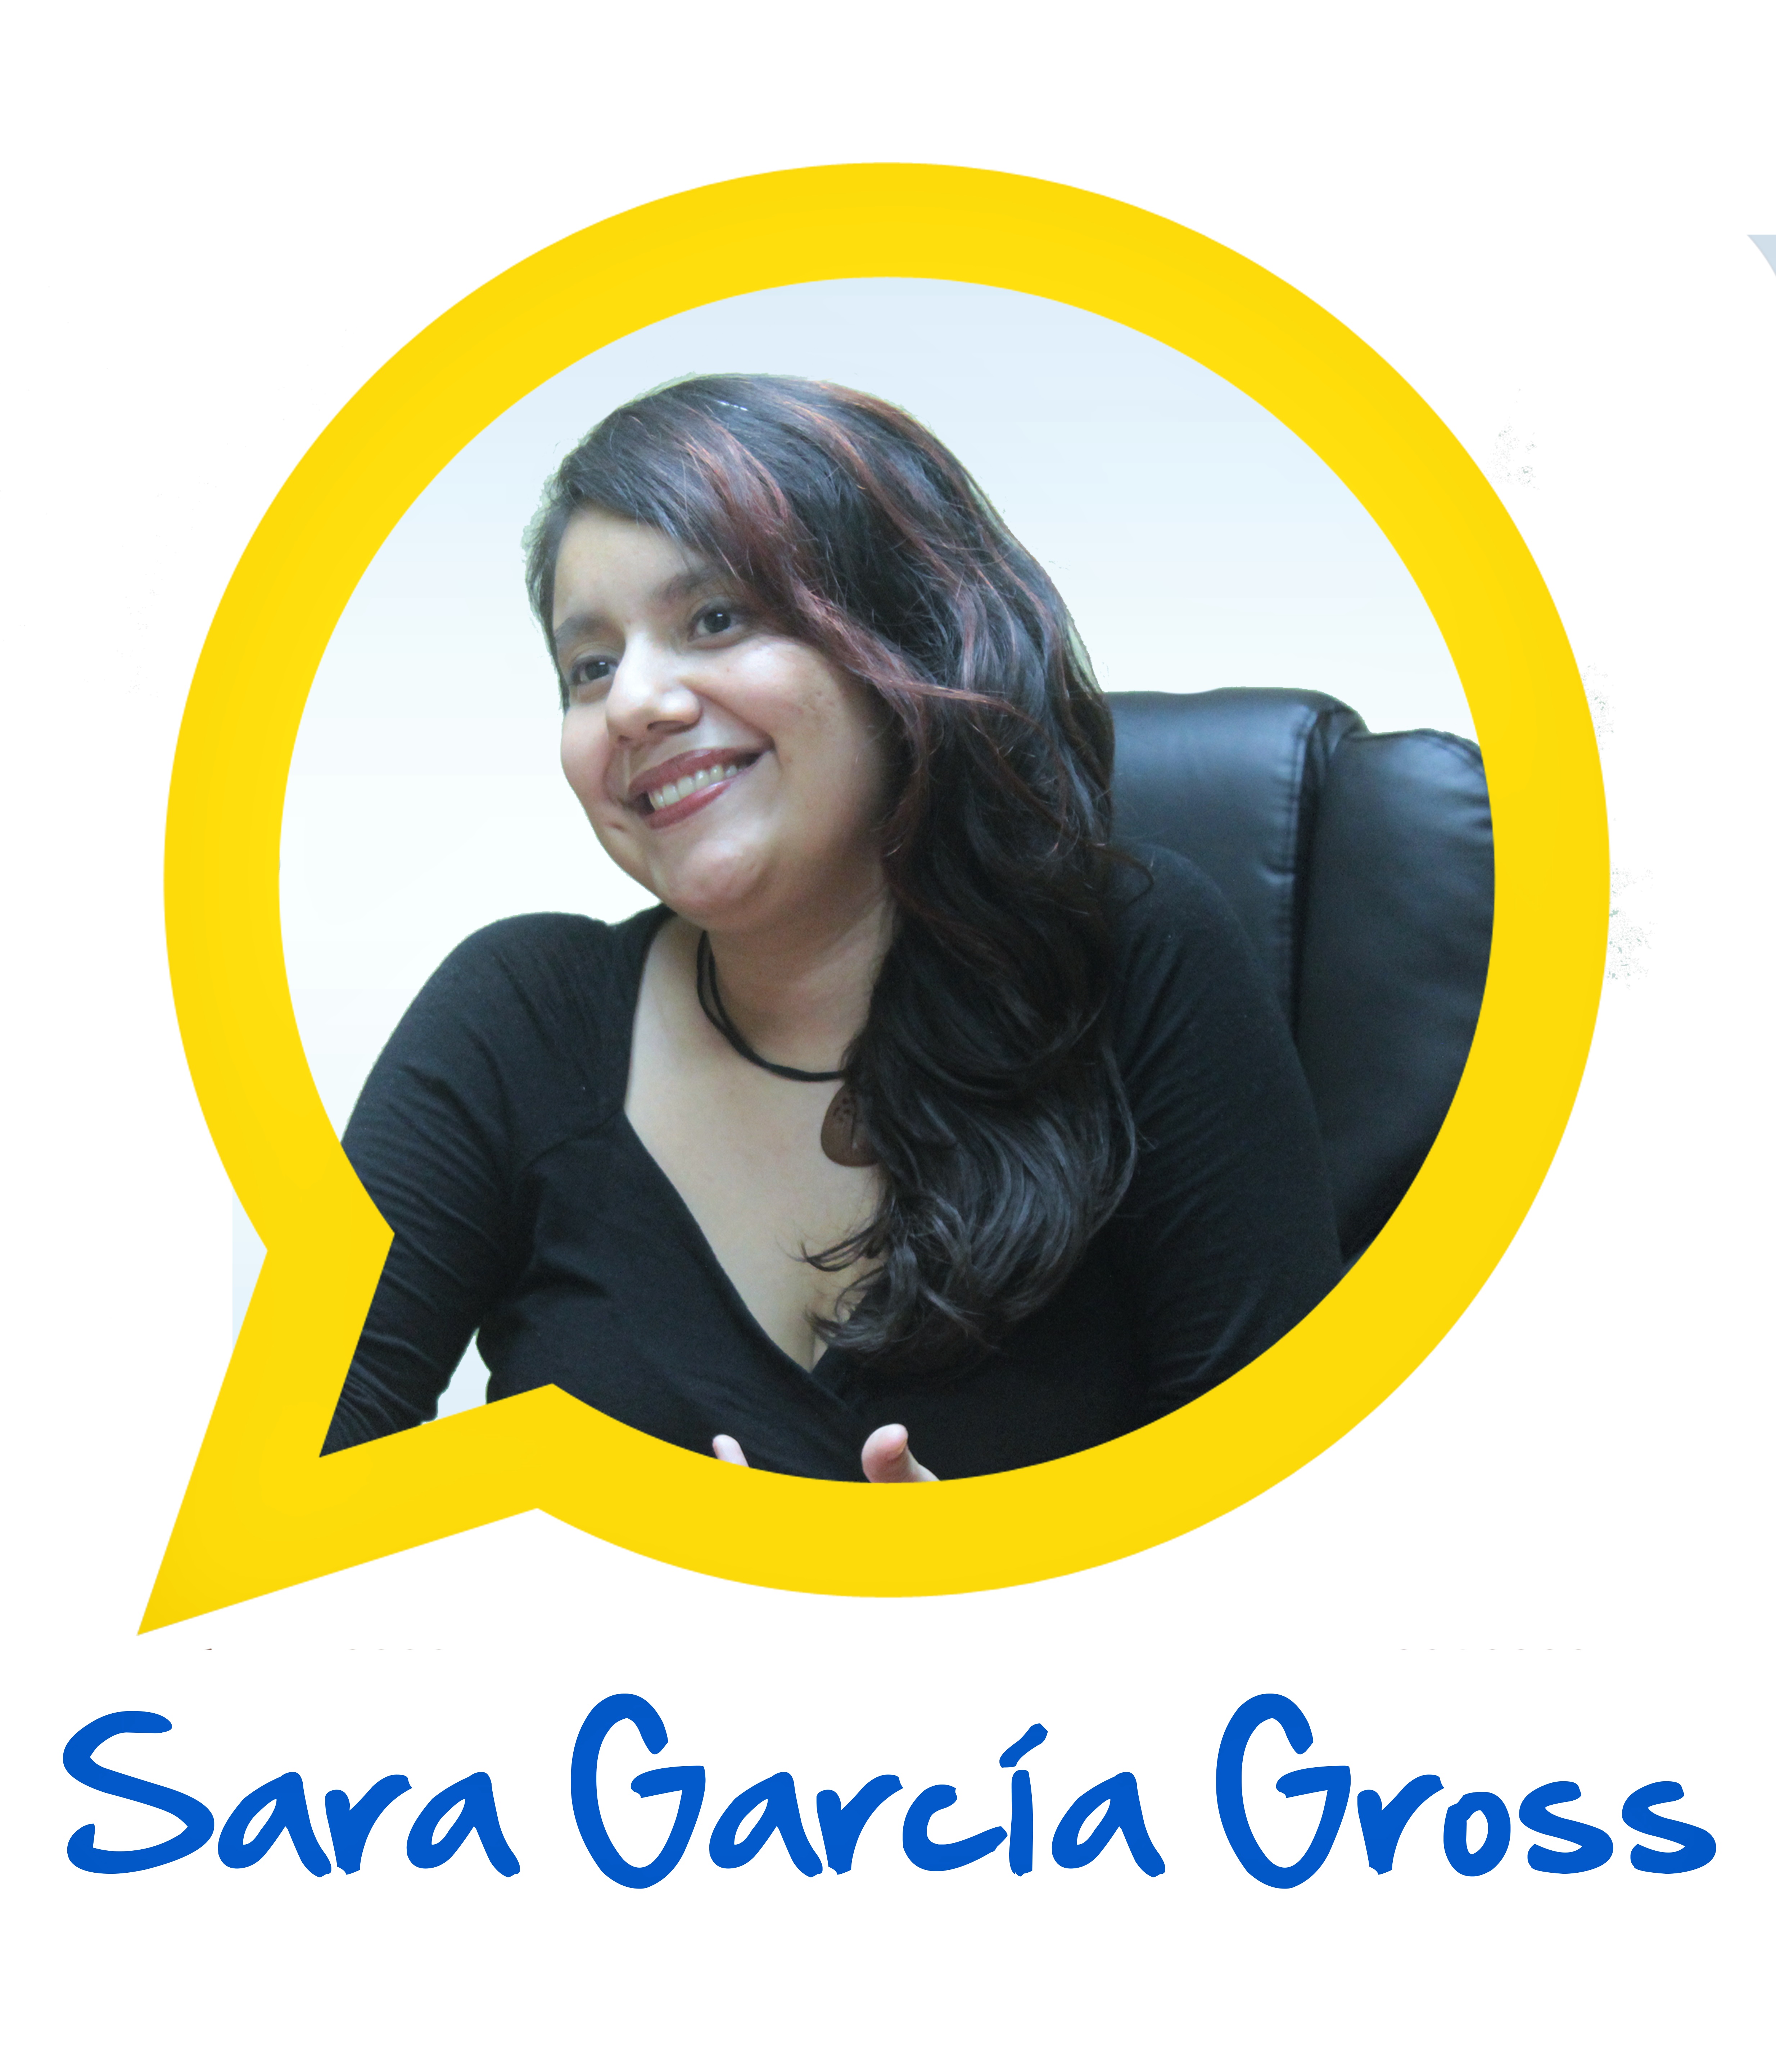 40 Sara García Gross